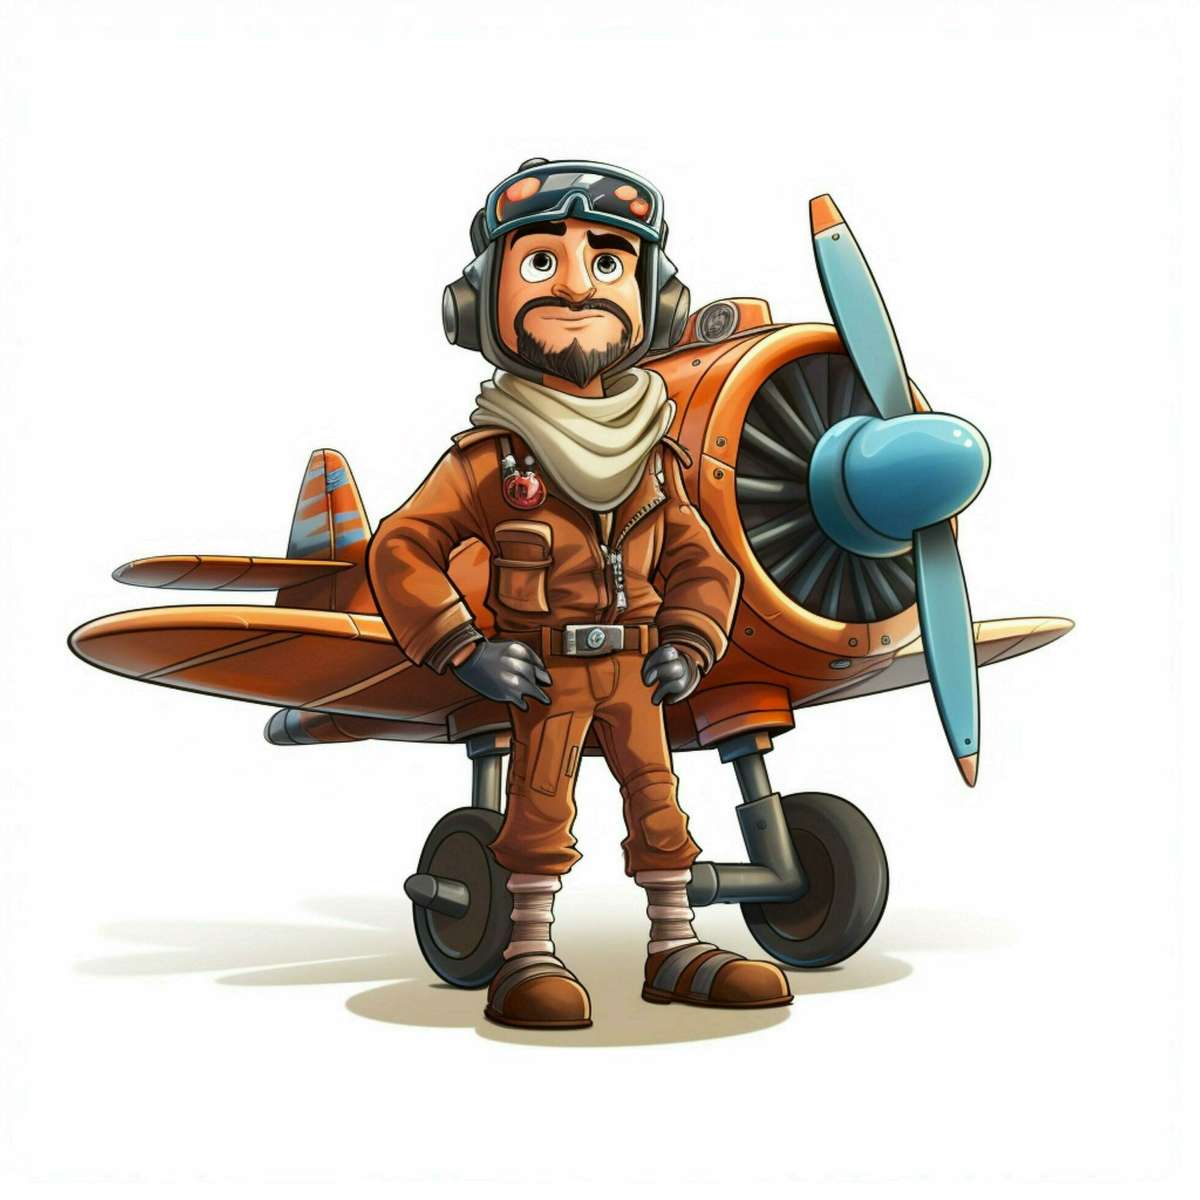 Piloto/Aviador puzzle online a partir de foto